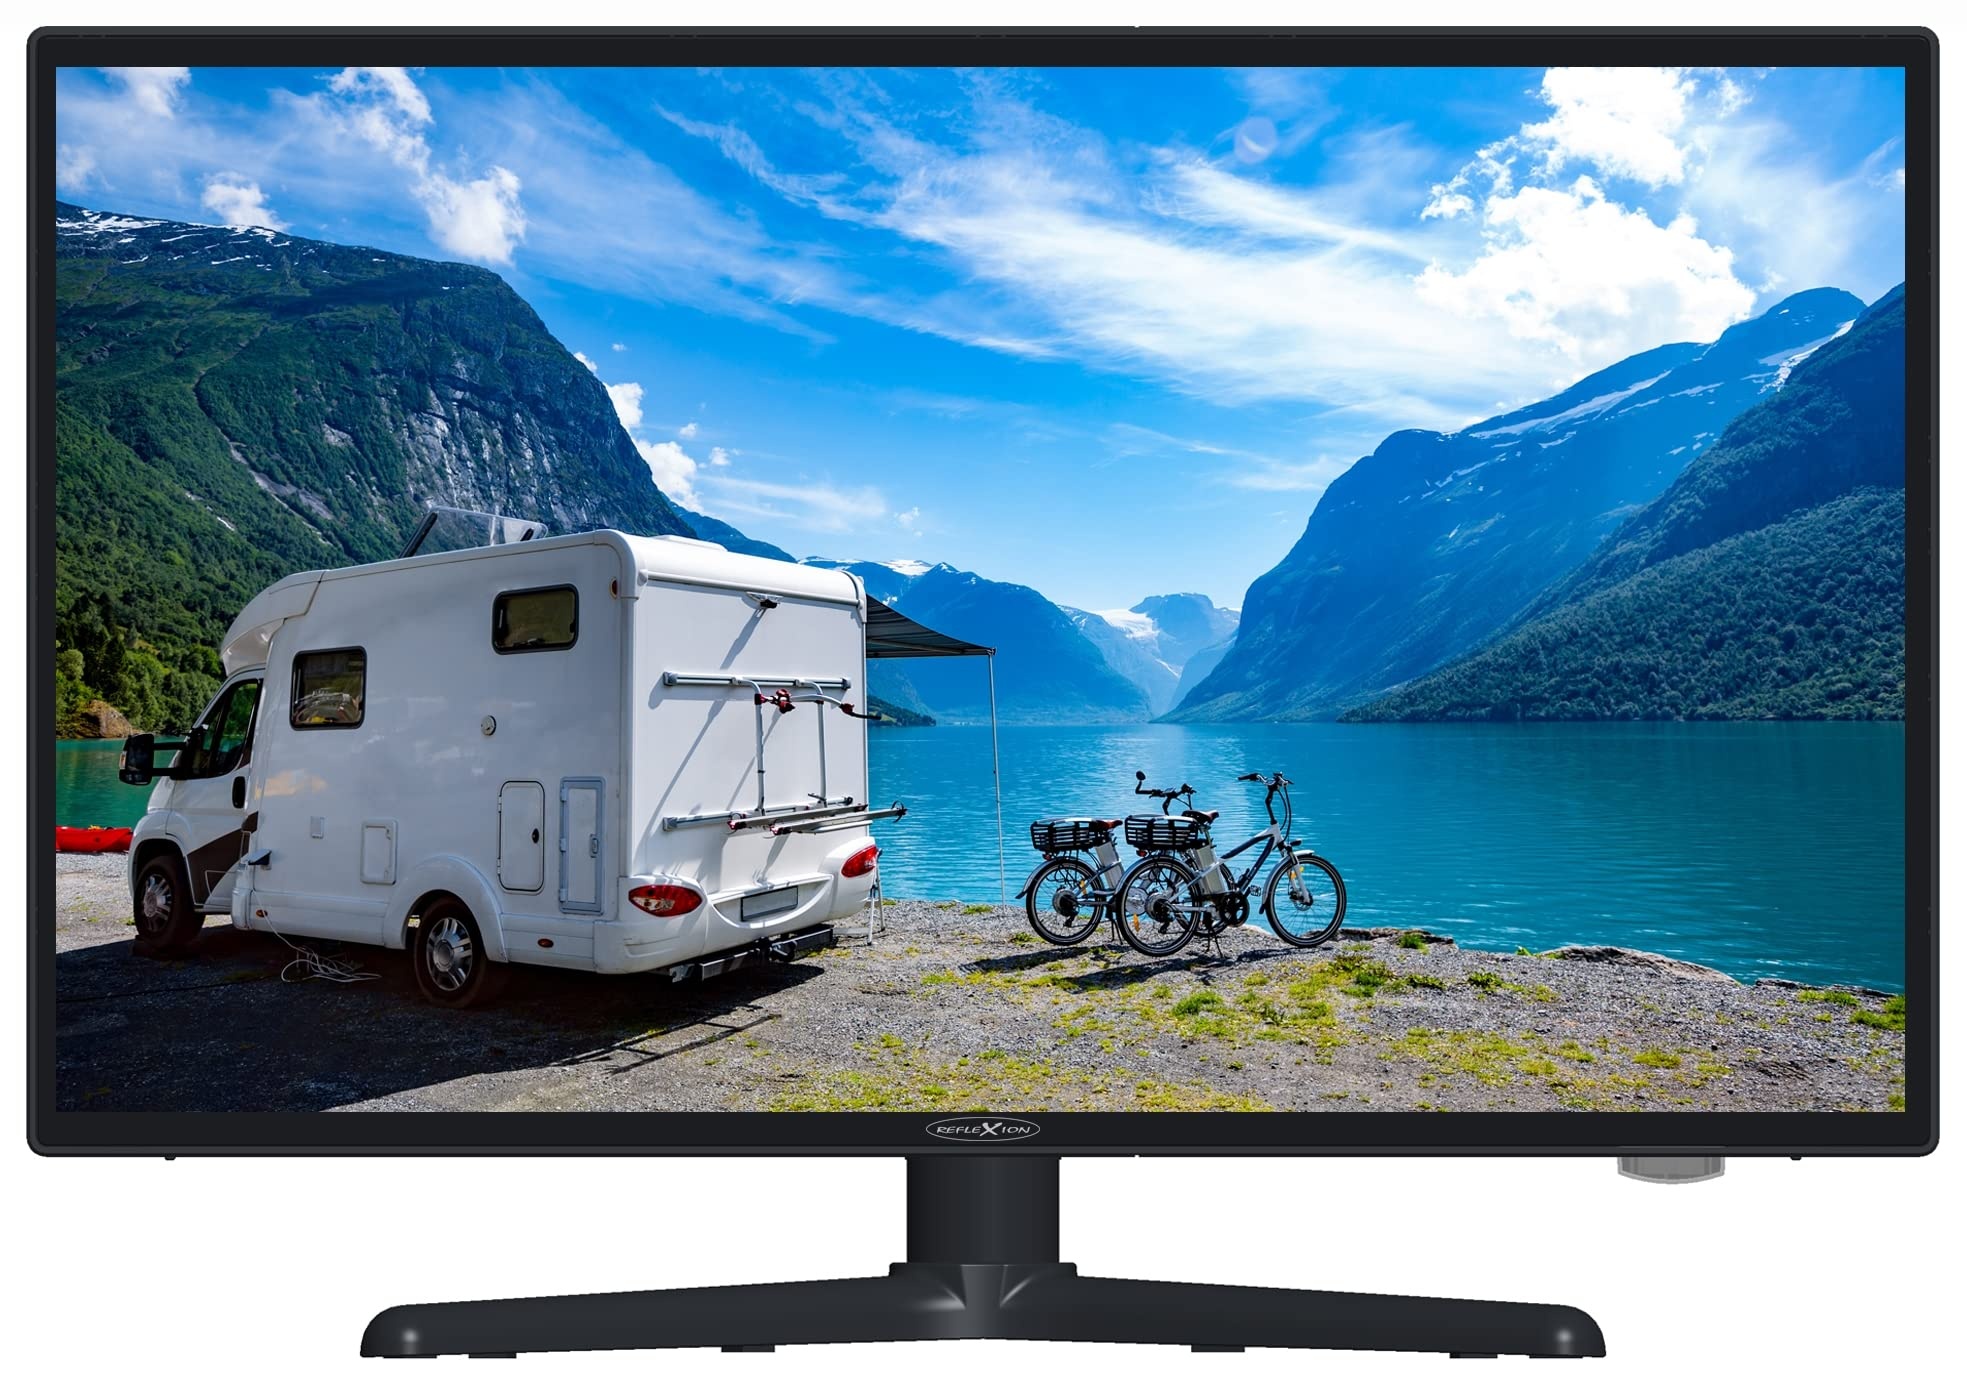 REFLEXION 19" Smart LED-TV LEDW19i+ mit DVB-T2 HD, DVB-C, DVB-S2, CI+Slot und Bluetooth für 12/24/230V